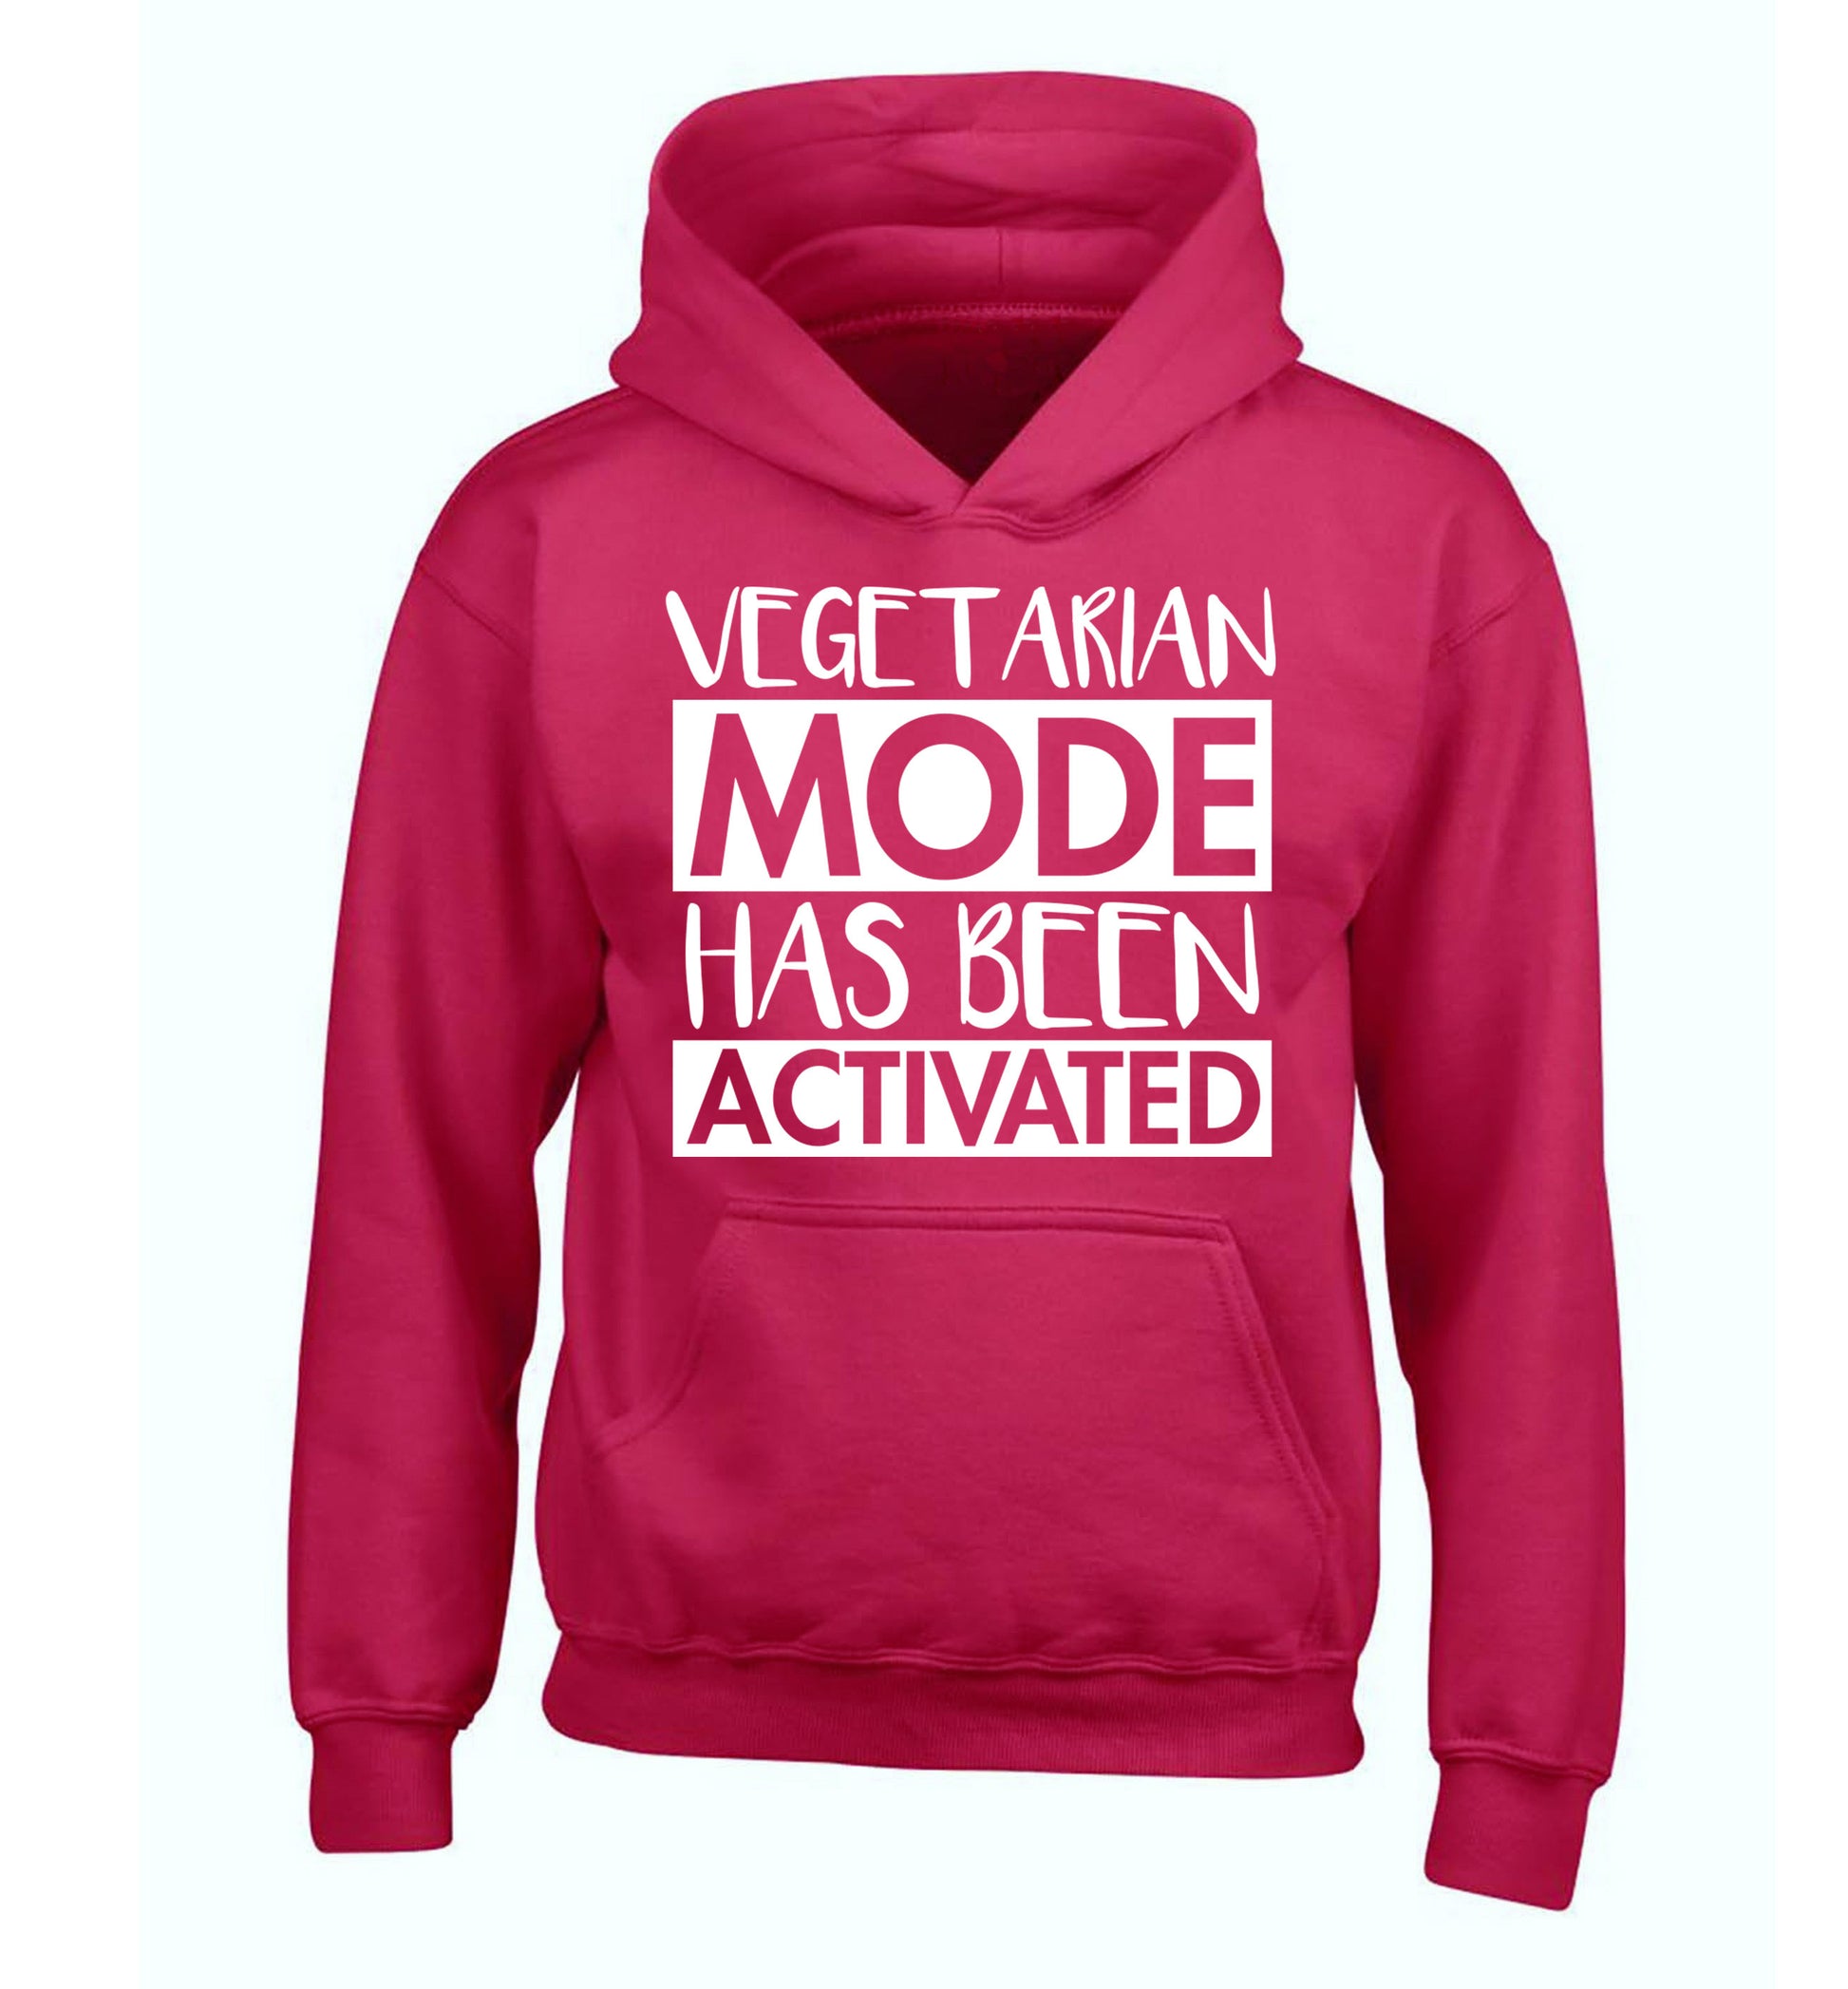 Vegetarian mode activated children's pink hoodie 12-14 Years